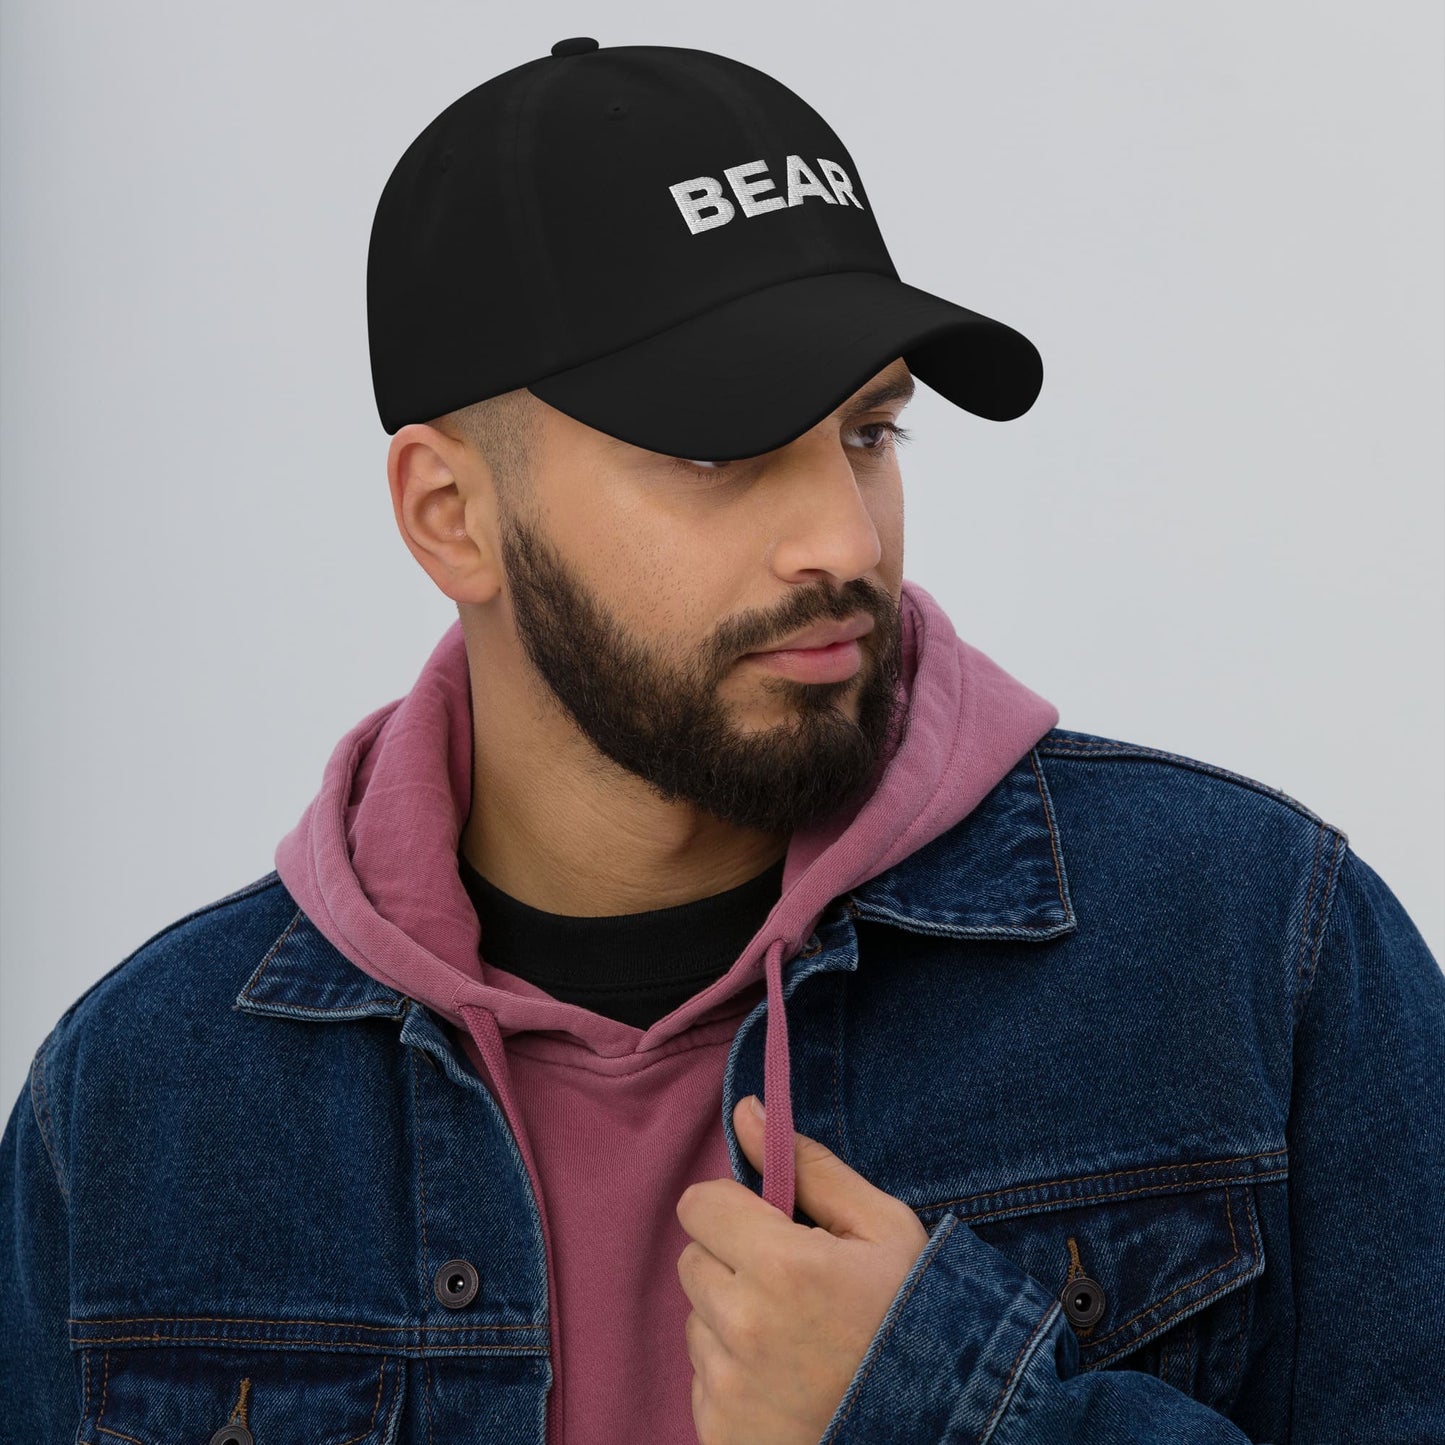 bear pride hat, embroidered gay bear cap, model 1